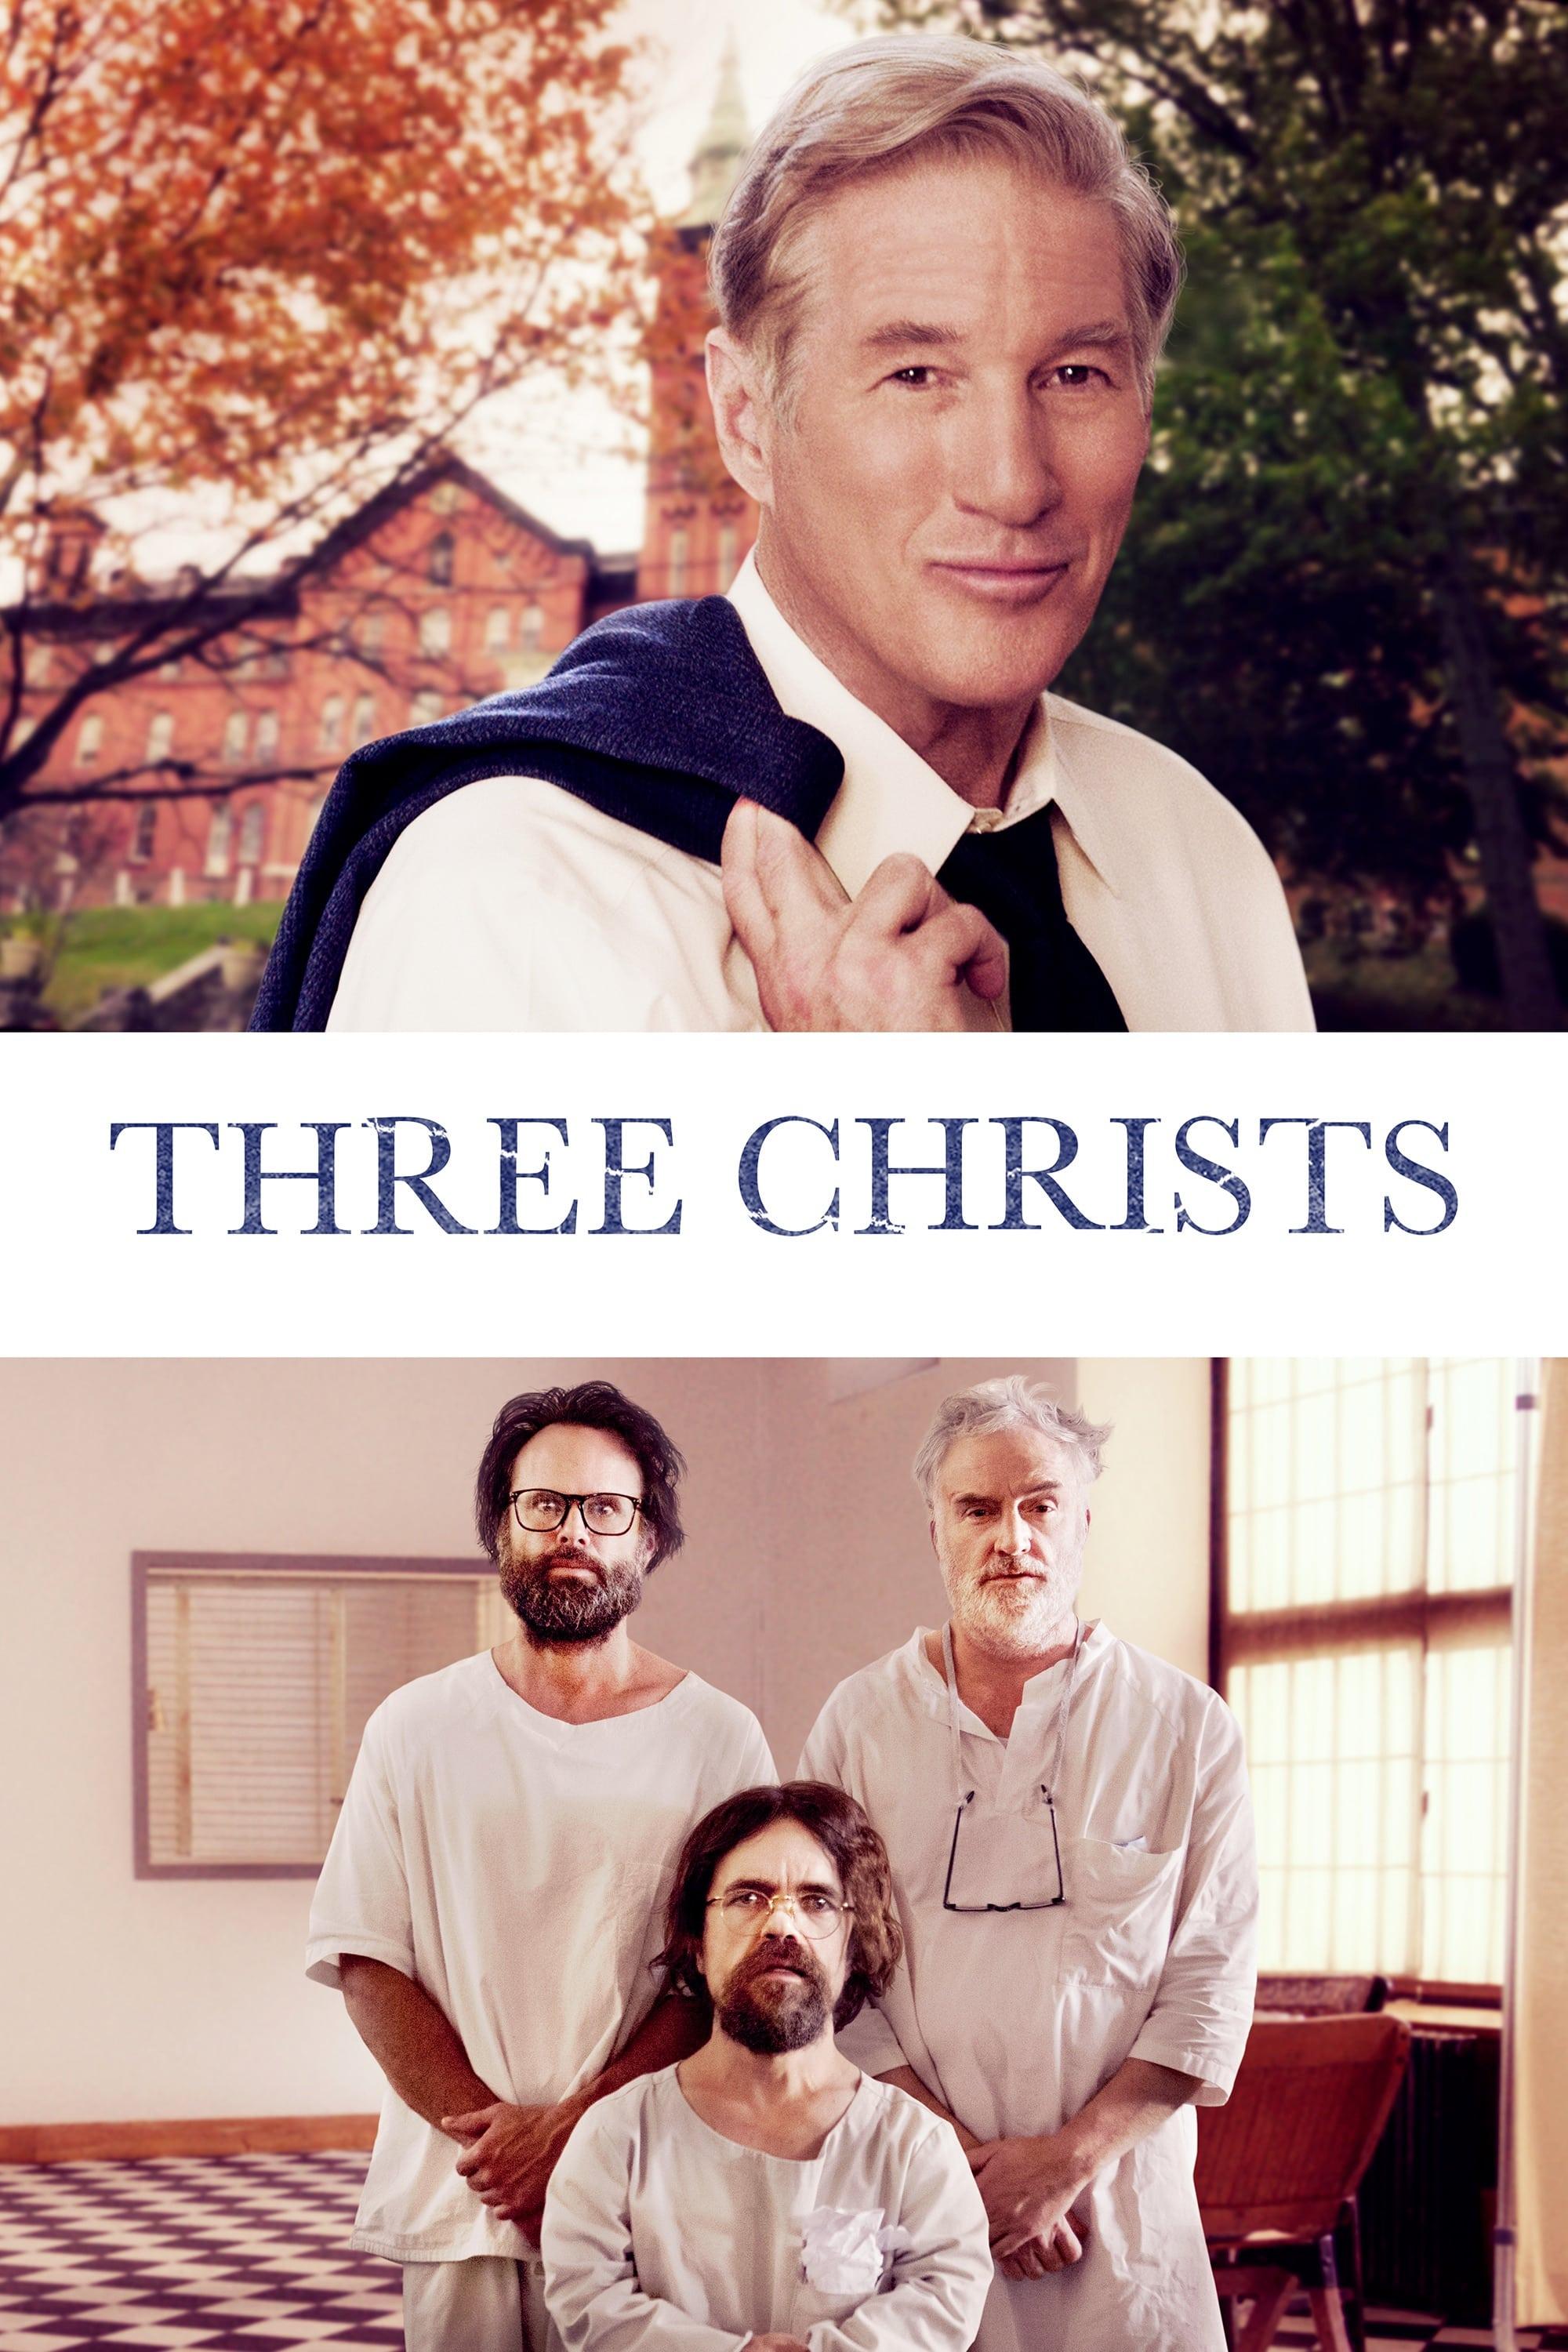 Three Christs poster